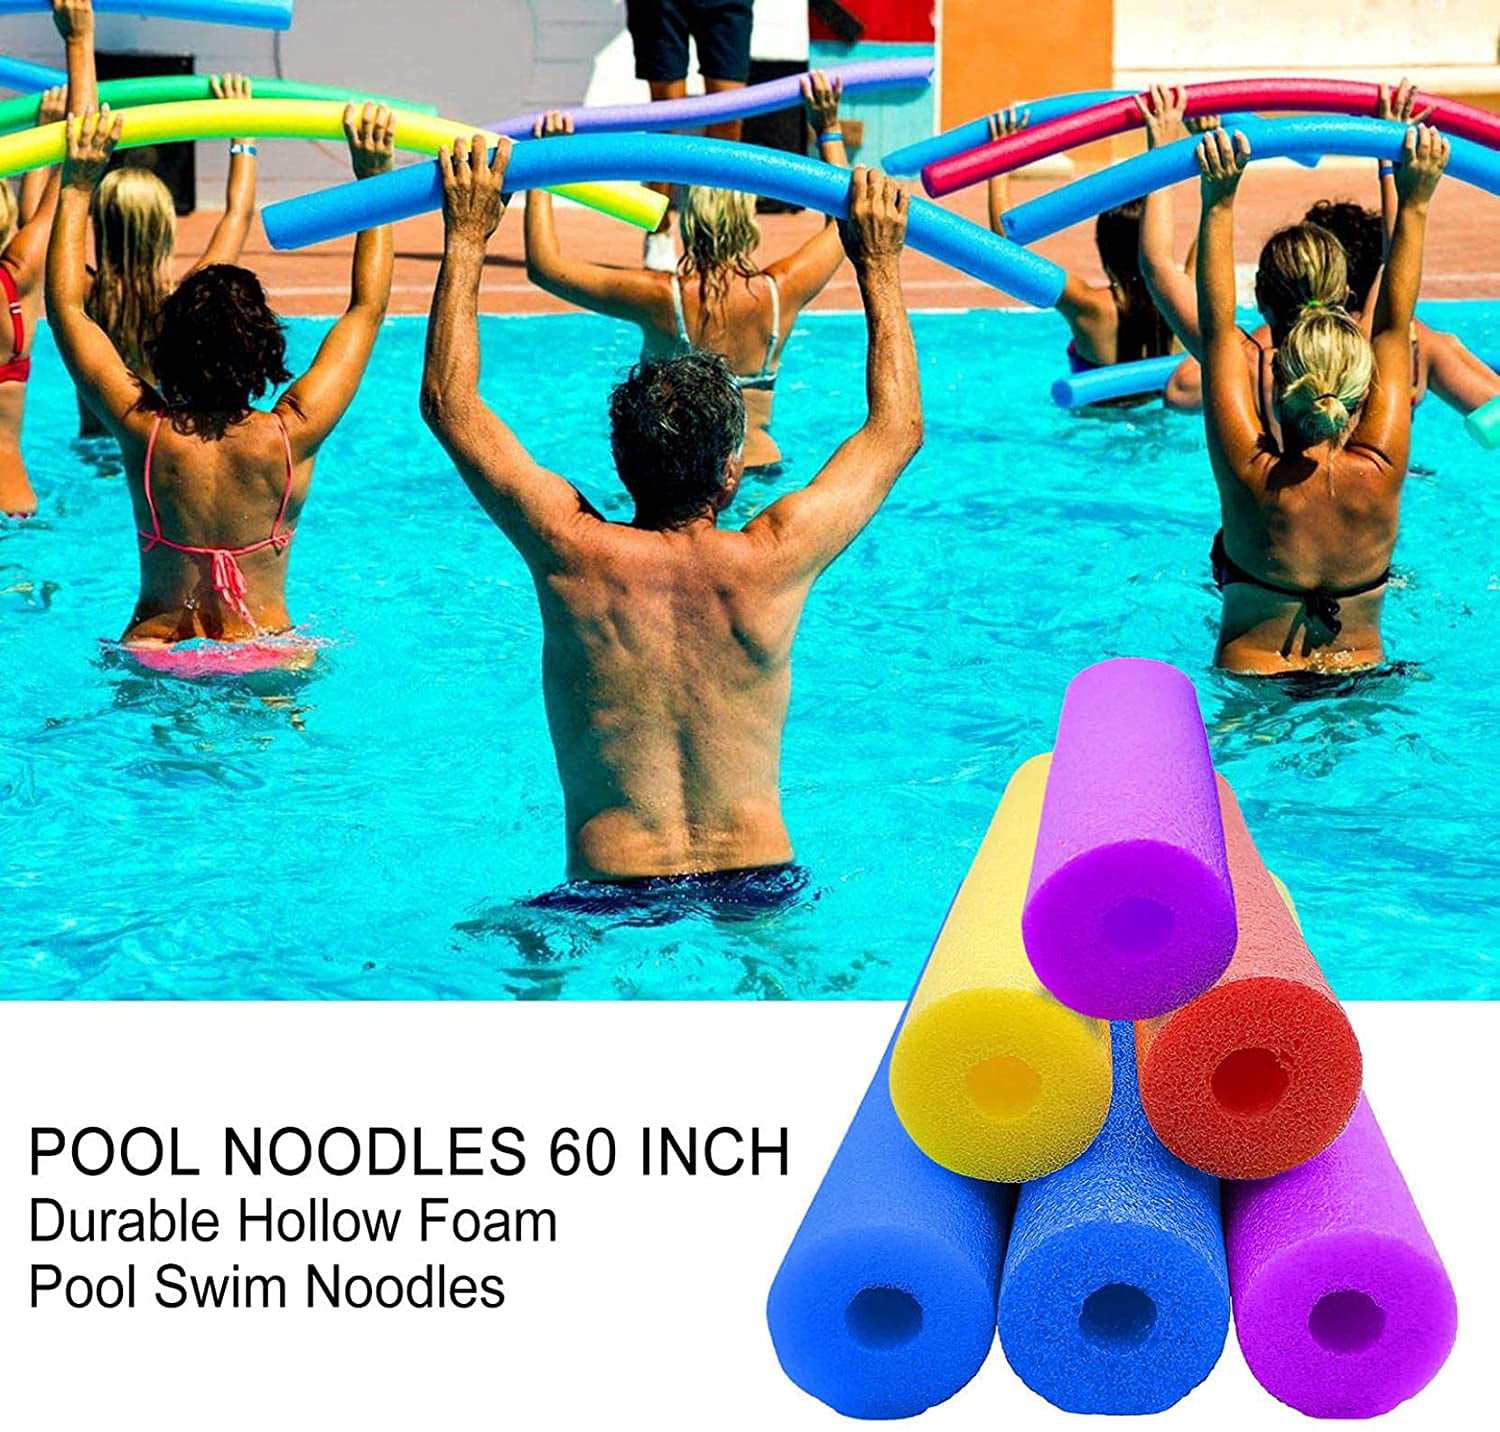 Pool Noodles 60 Inch Floating Pool Noodles Foam Tube,Durable Hollow Foam Pool Swim Noodles,Bright Colorful Swimming Pool Foam Stick,Swimming Pool and Accessories